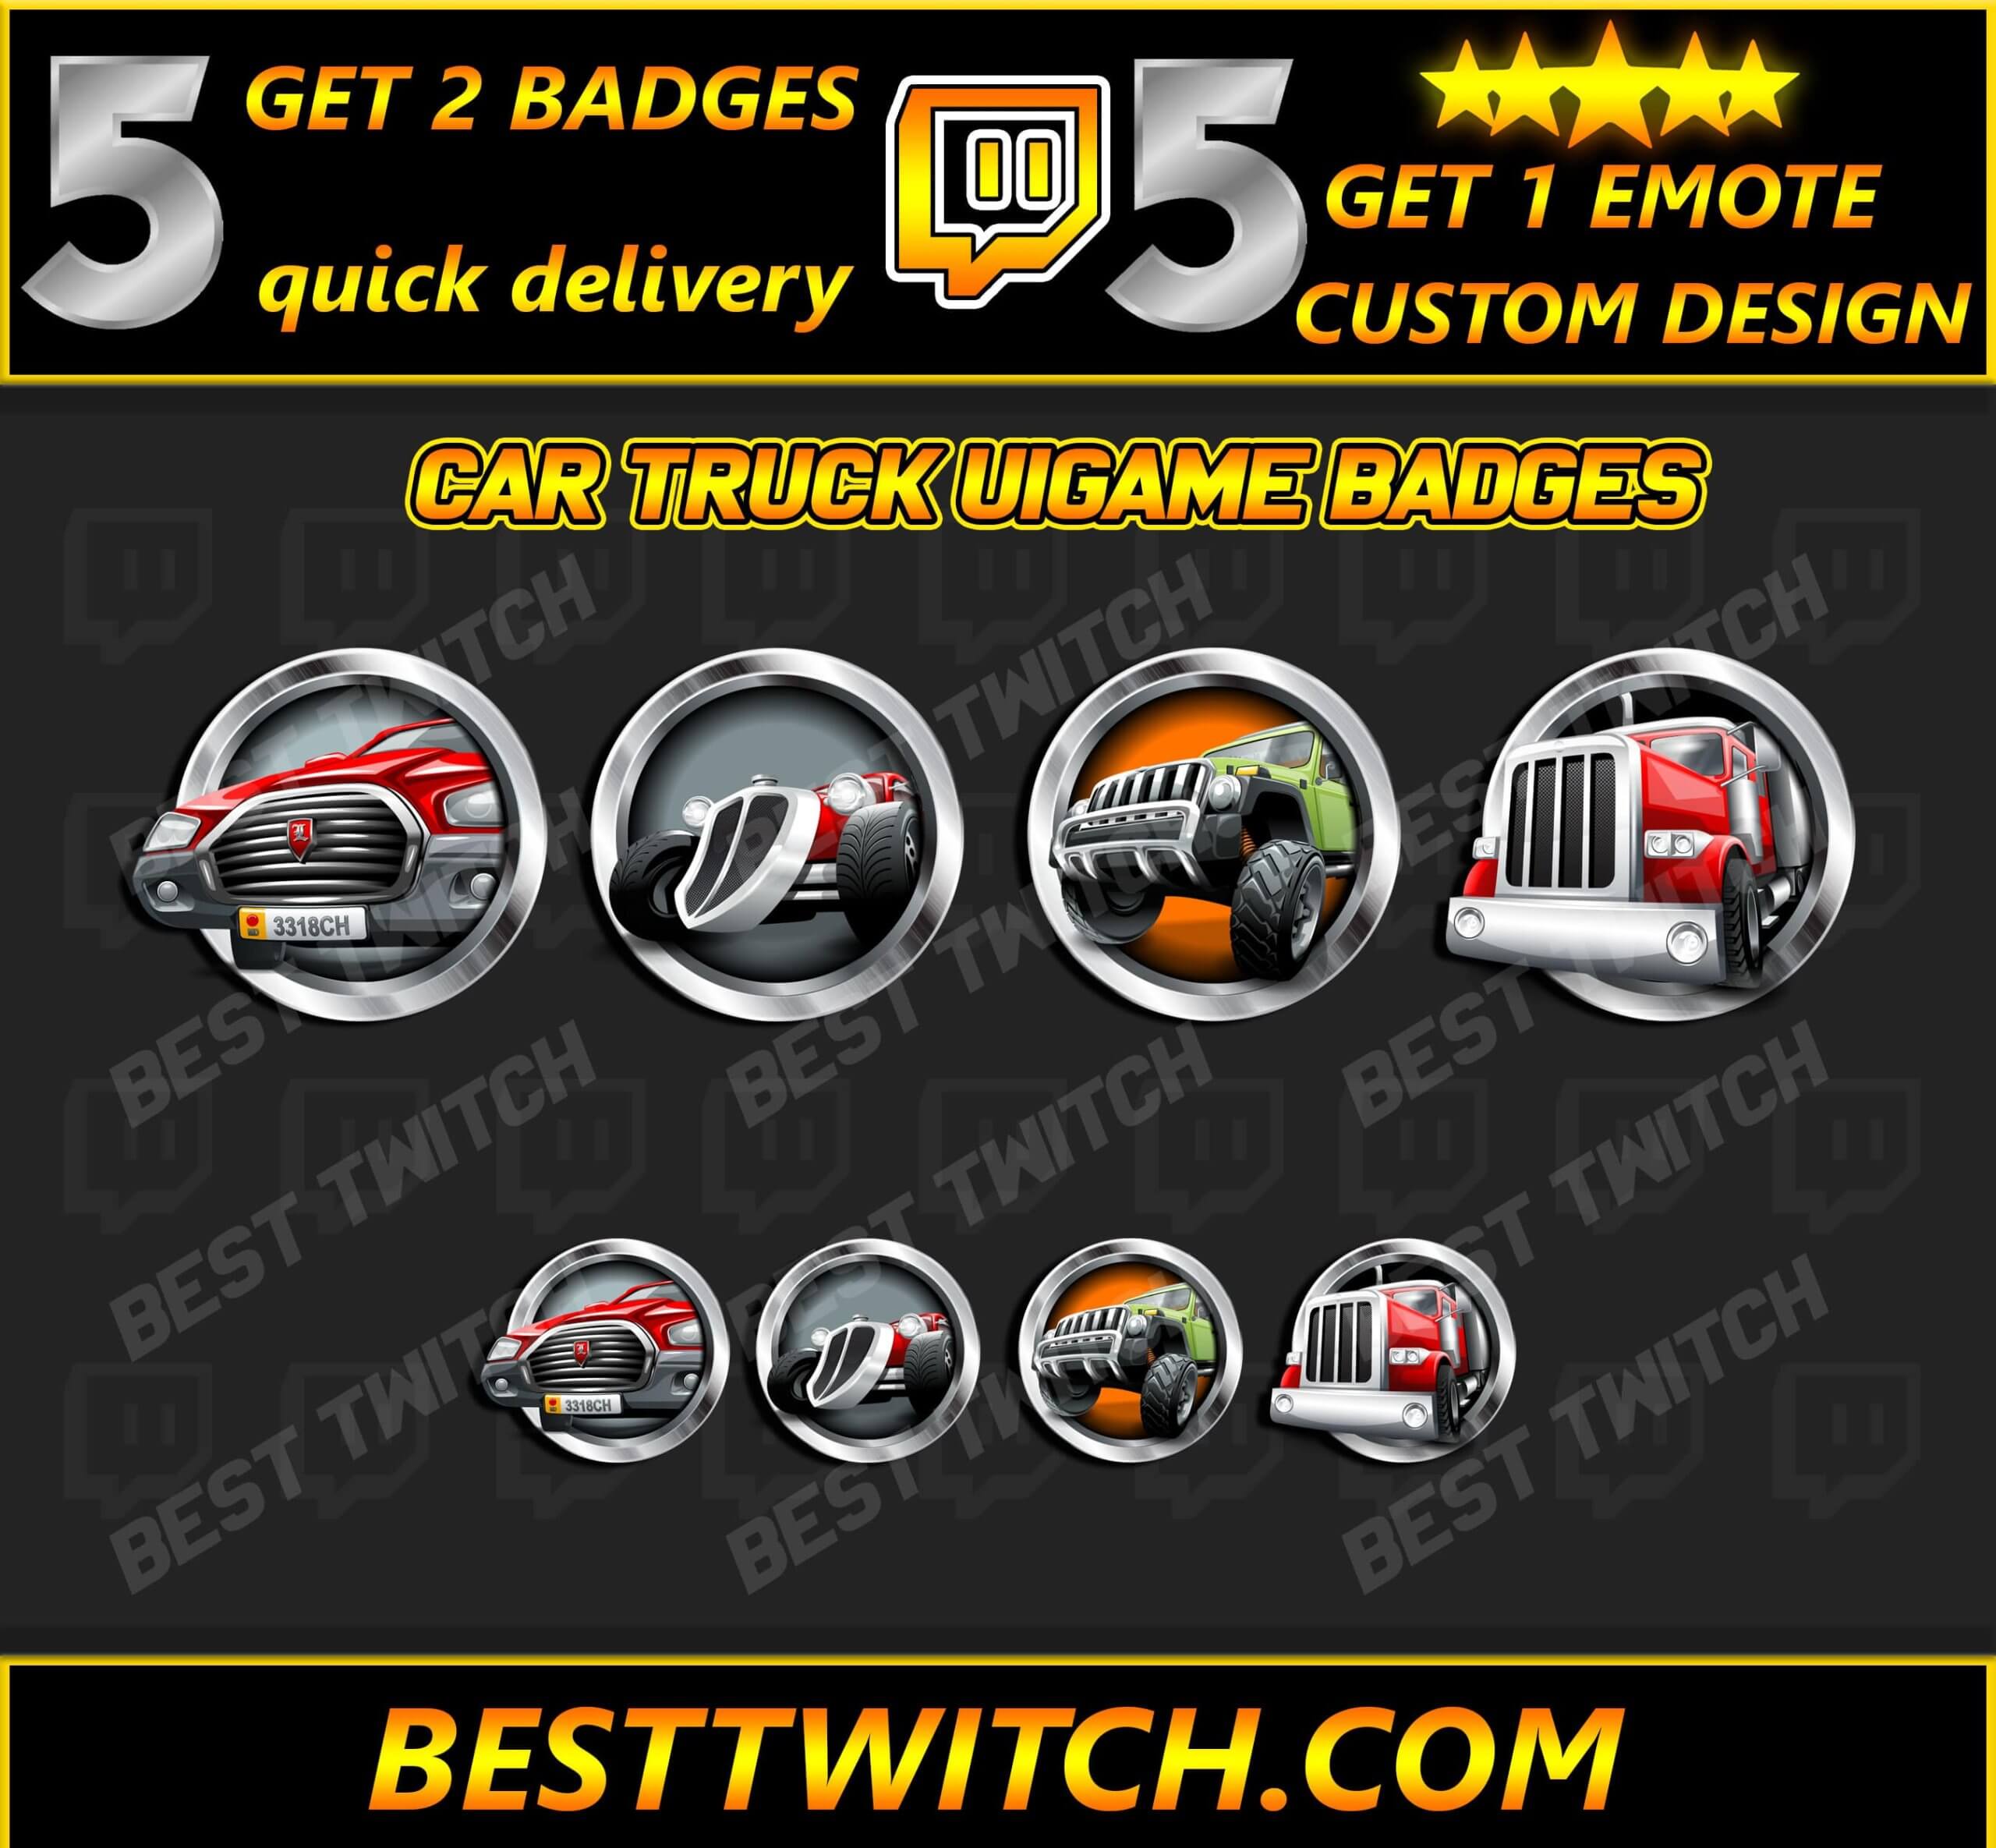 Car truck & SUV twitch kick sub badges ! BestTwitch